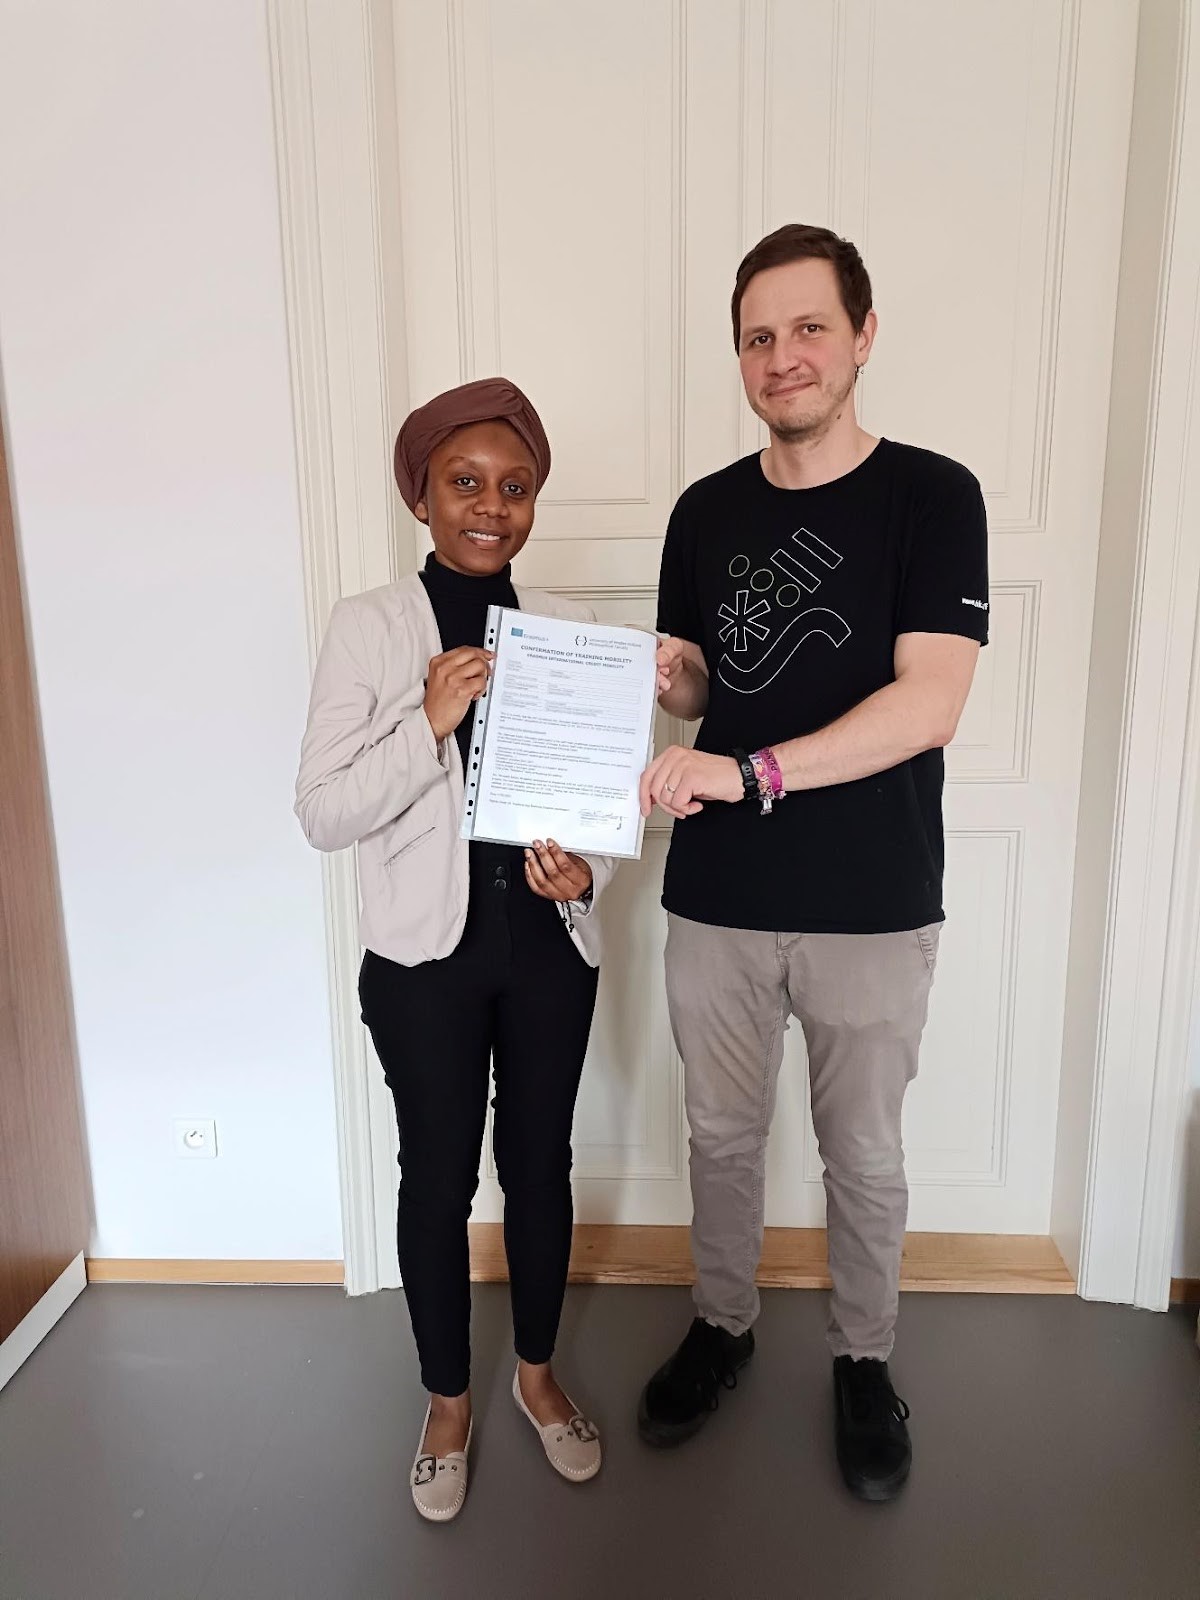 Mr. Tomáš Herčík issued a confirmation of the Erasmus International Credit Mobility certificate to Ms. Kadzo Mwandary